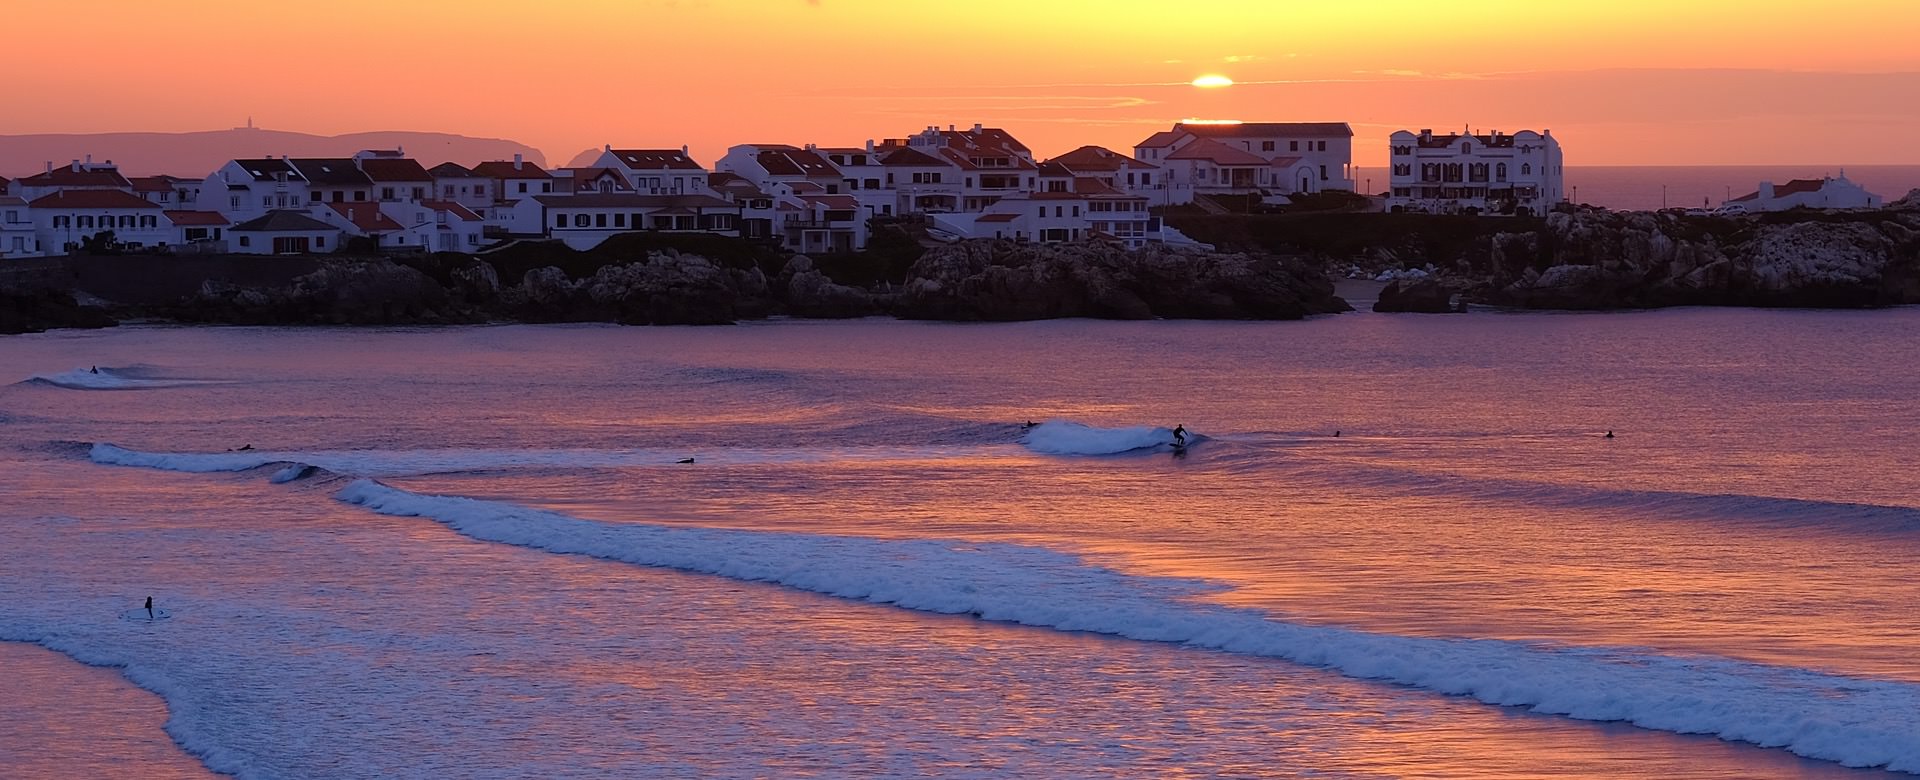 Sunset surf en Baleal, Peniche